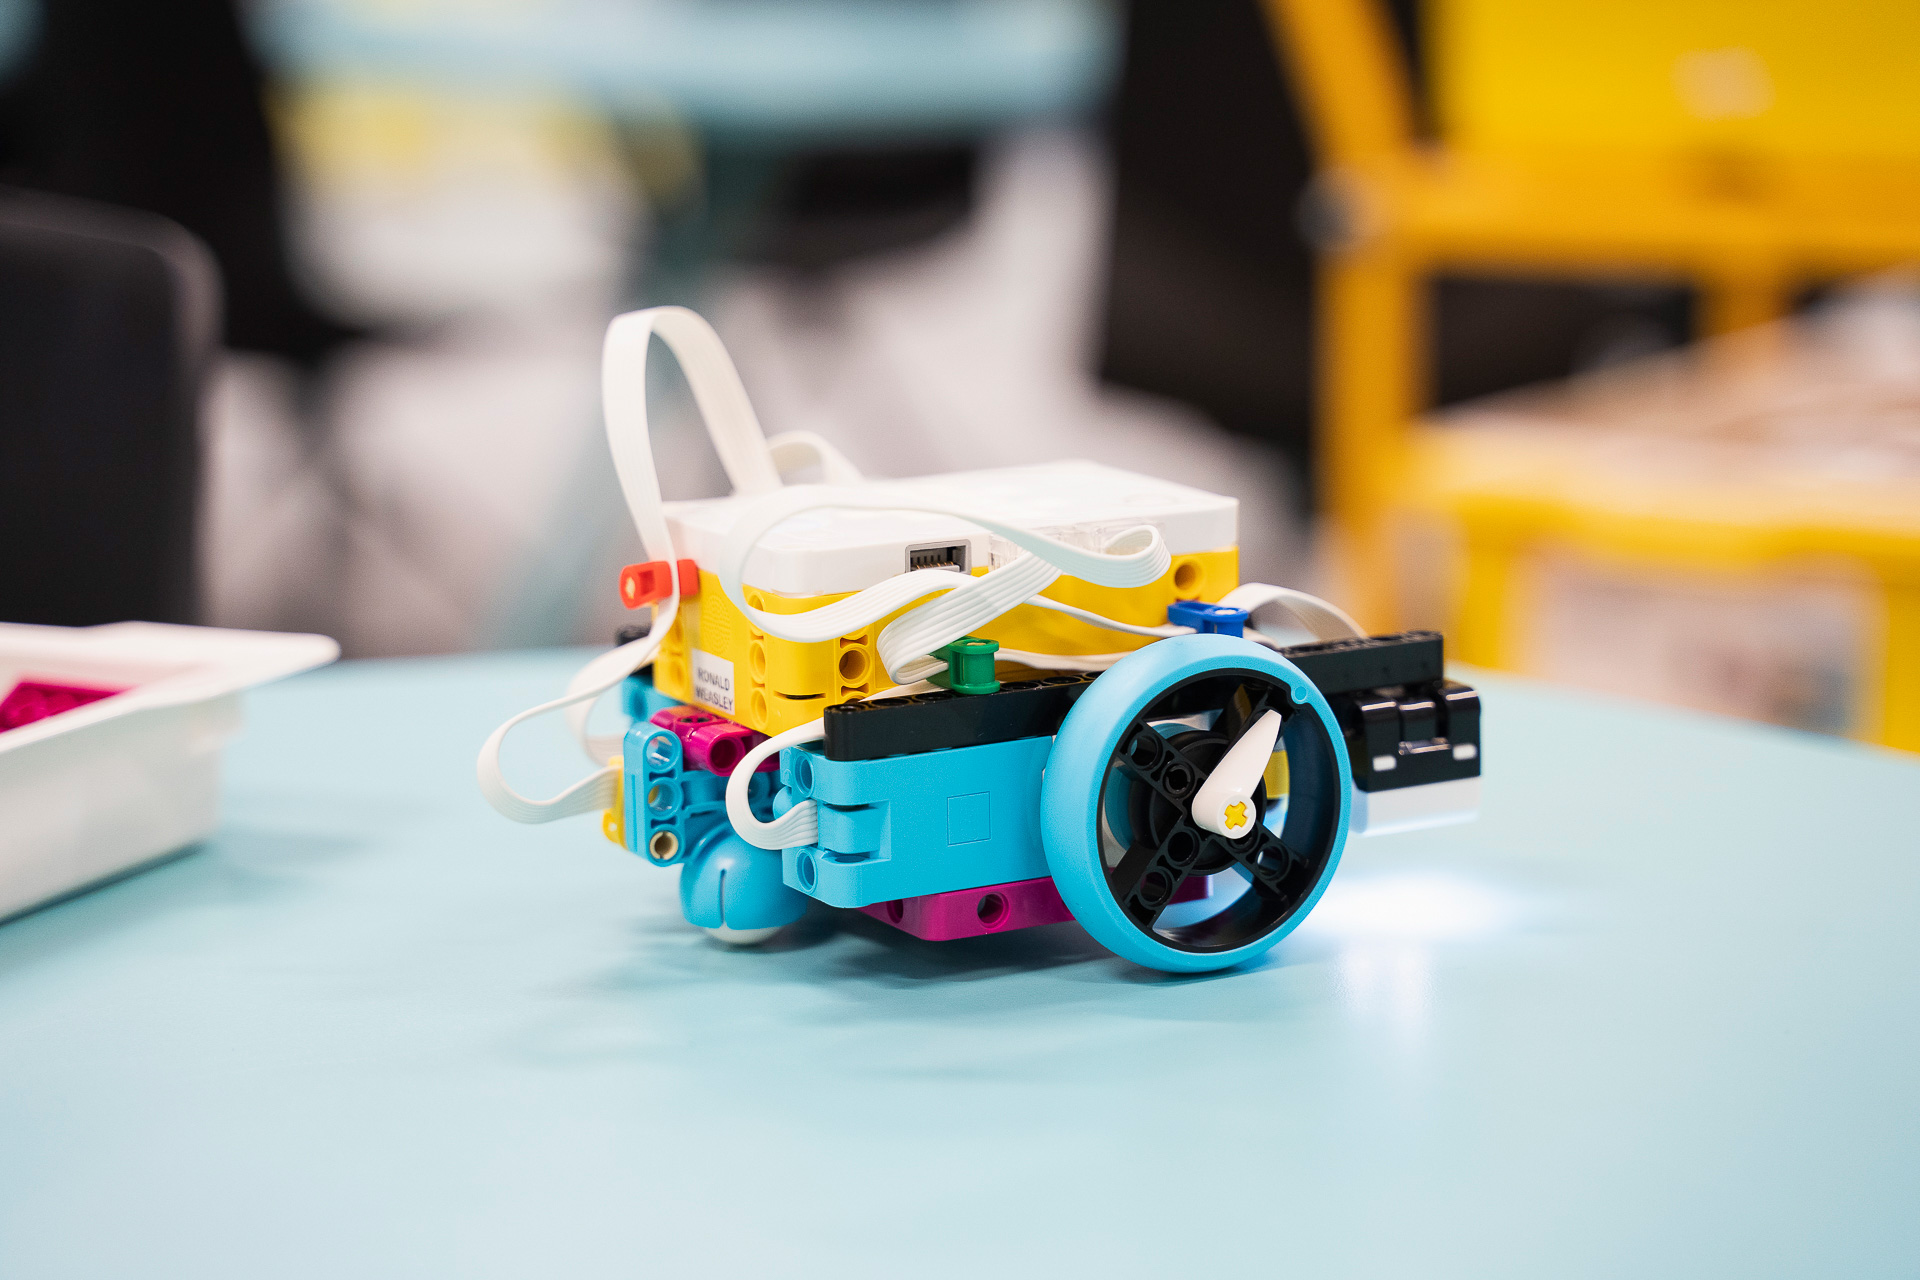 En motordriven figur i lego från skolbesöket motordrivna figurer hos expectrum. Fotograf: Matilda Hildingsson